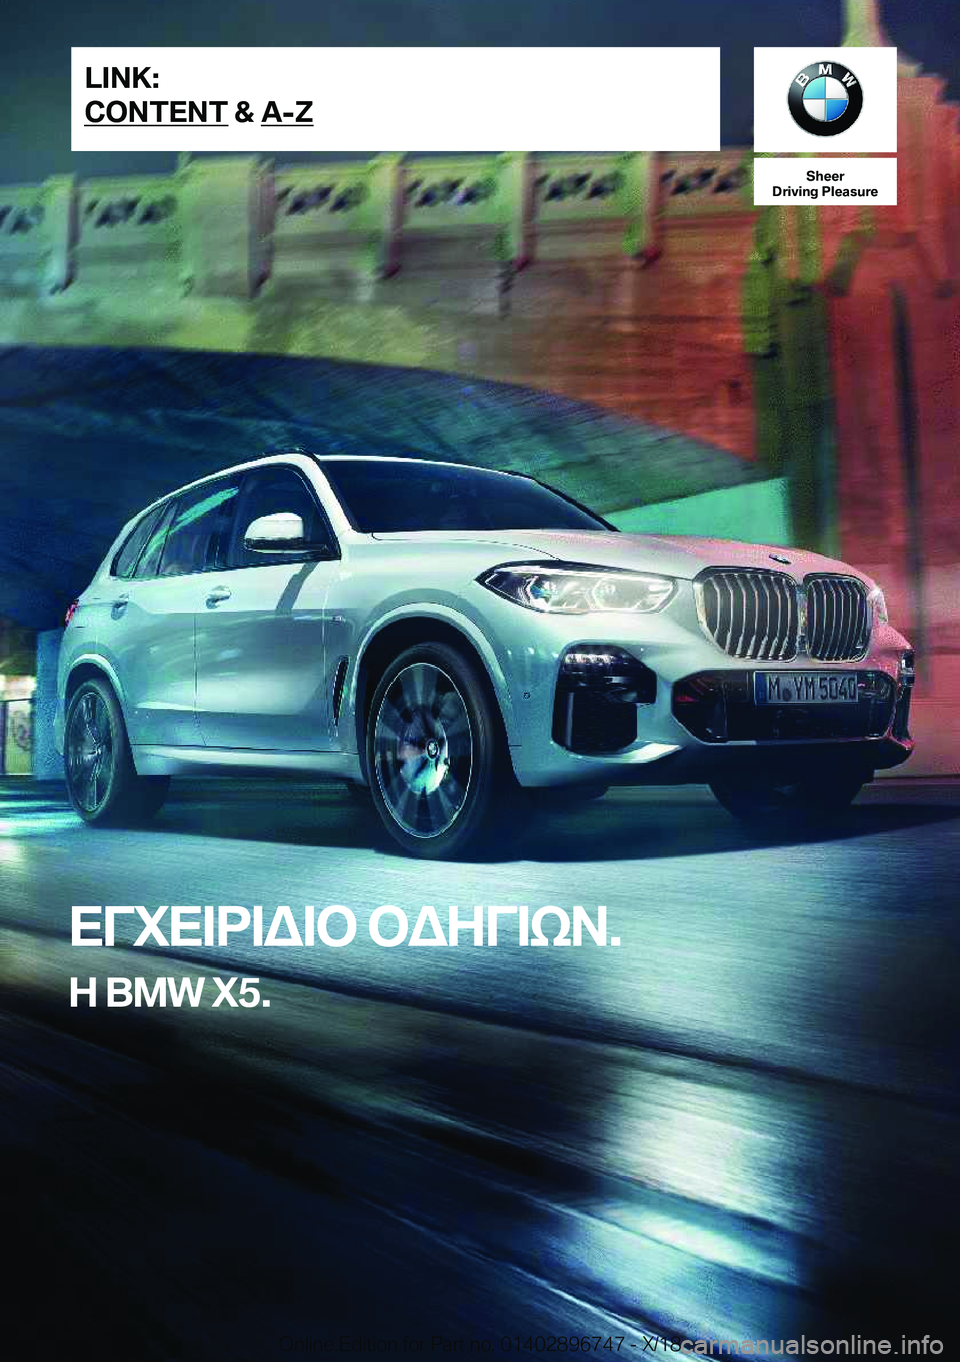 BMW X5 2019  ΟΔΗΓΌΣ ΧΡΉΣΗΣ (in Greek) �S�h�e�e�r
�D�r�i�v�i�n�g��P�l�e�a�s�u�r�e
XViX=d=W=b�bWZV=kA�.
Z��B�M�W��X�5�.�L�I�N�K�:
�C�O�N�T�E�N�T��&��A�-�Z�O�n�l�i�n�e��E�d�i�t�i�o�n��f�o�r��P�a�r�t��n�o�.��0�1�4